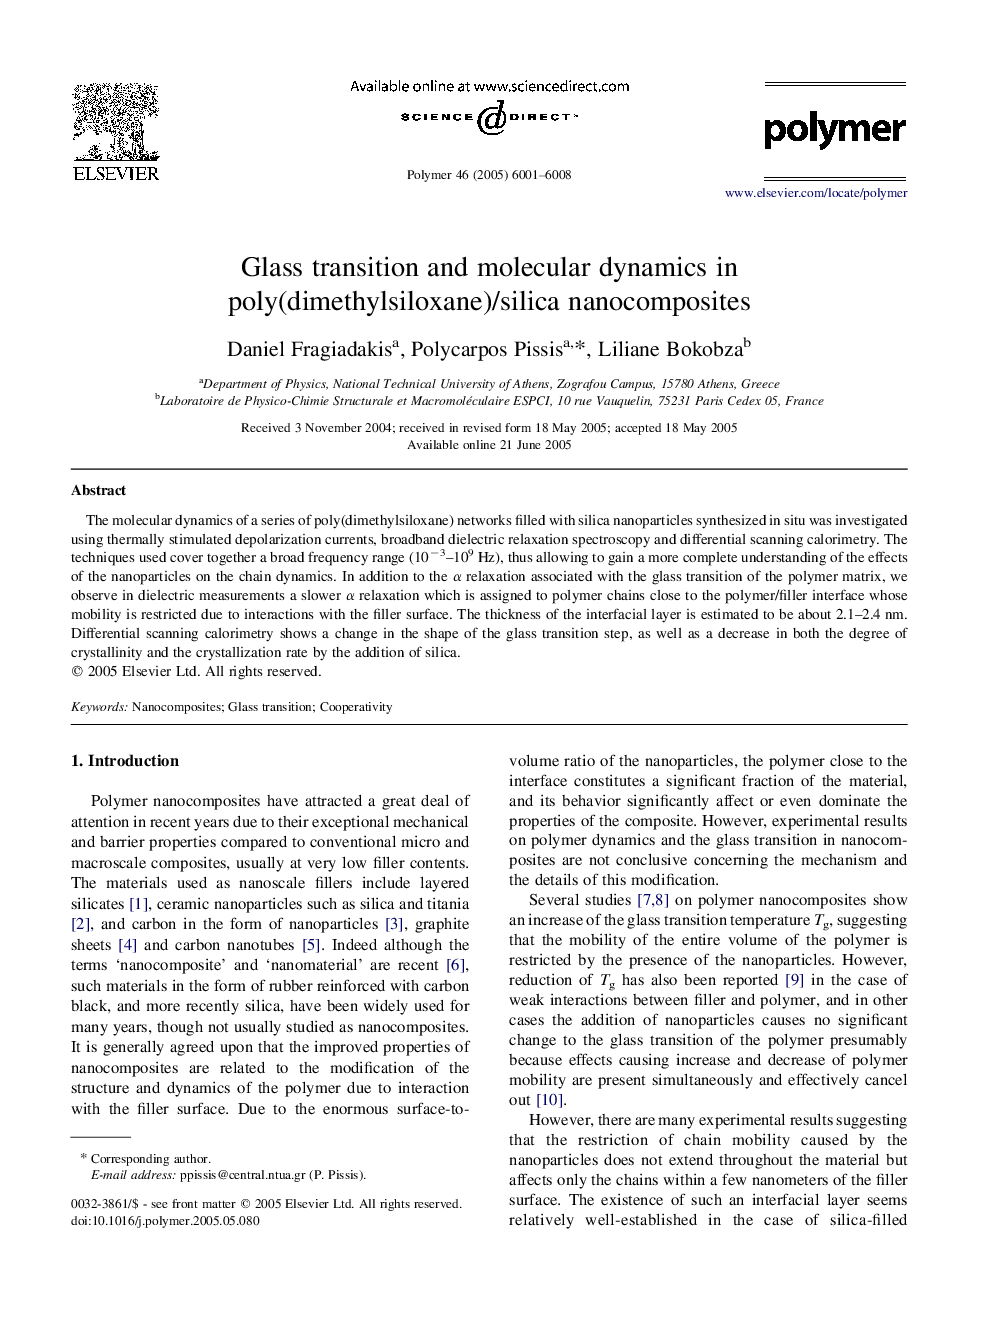 Glass transition and molecular dynamics in poly(dimethylsiloxane)/silica nanocomposites